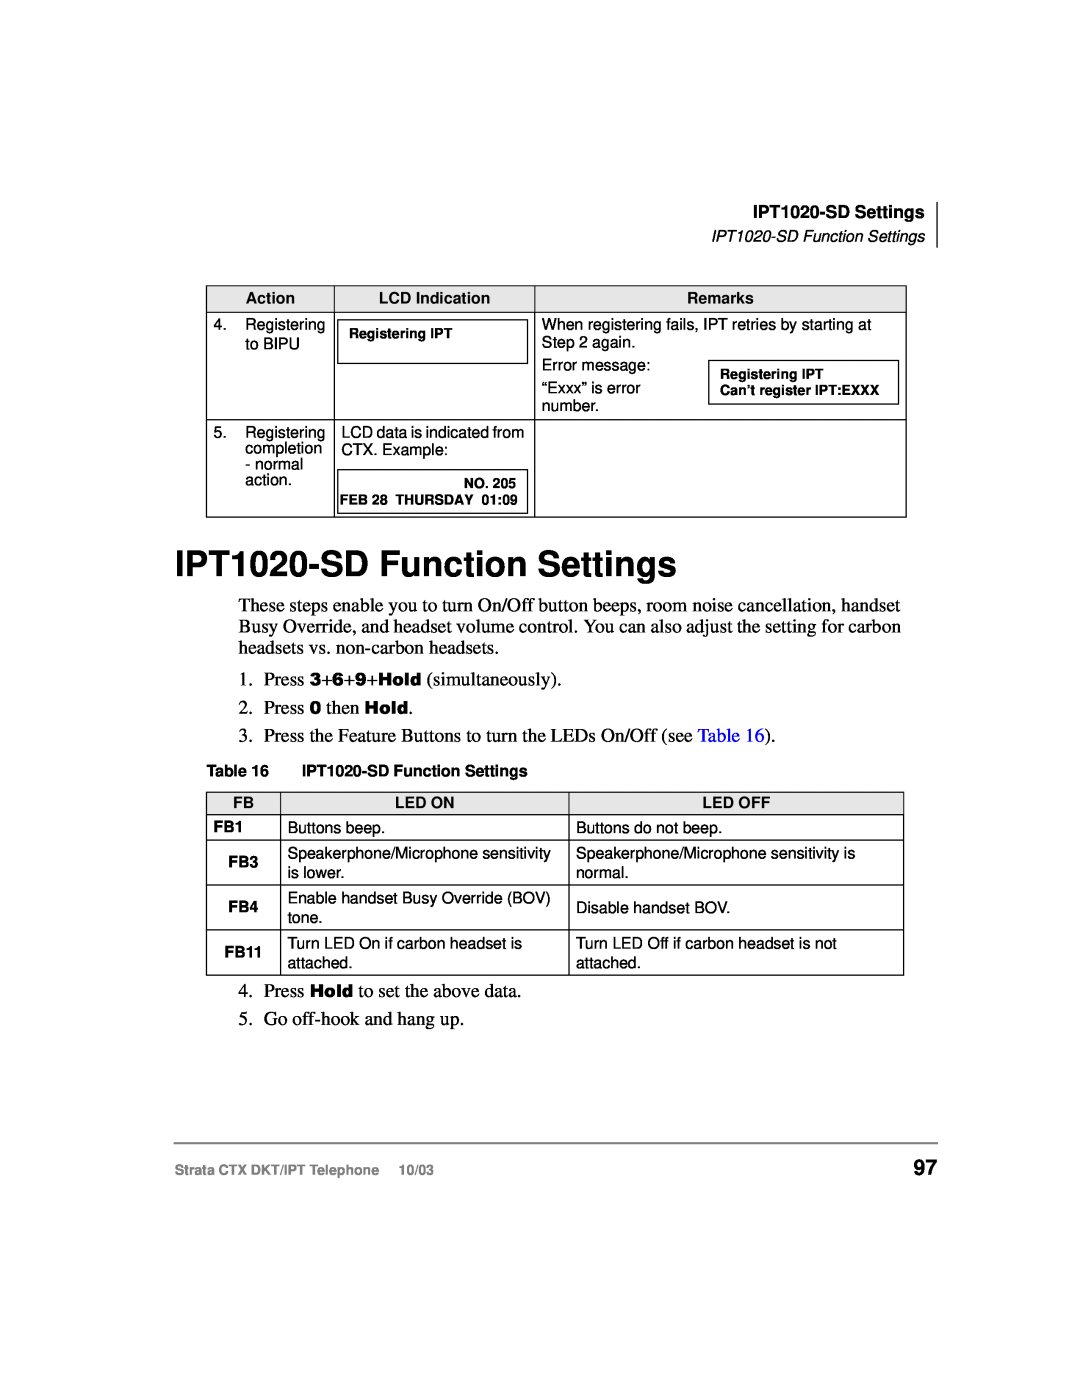 Toshiba DKT manual IPT1020-SD Function Settings 